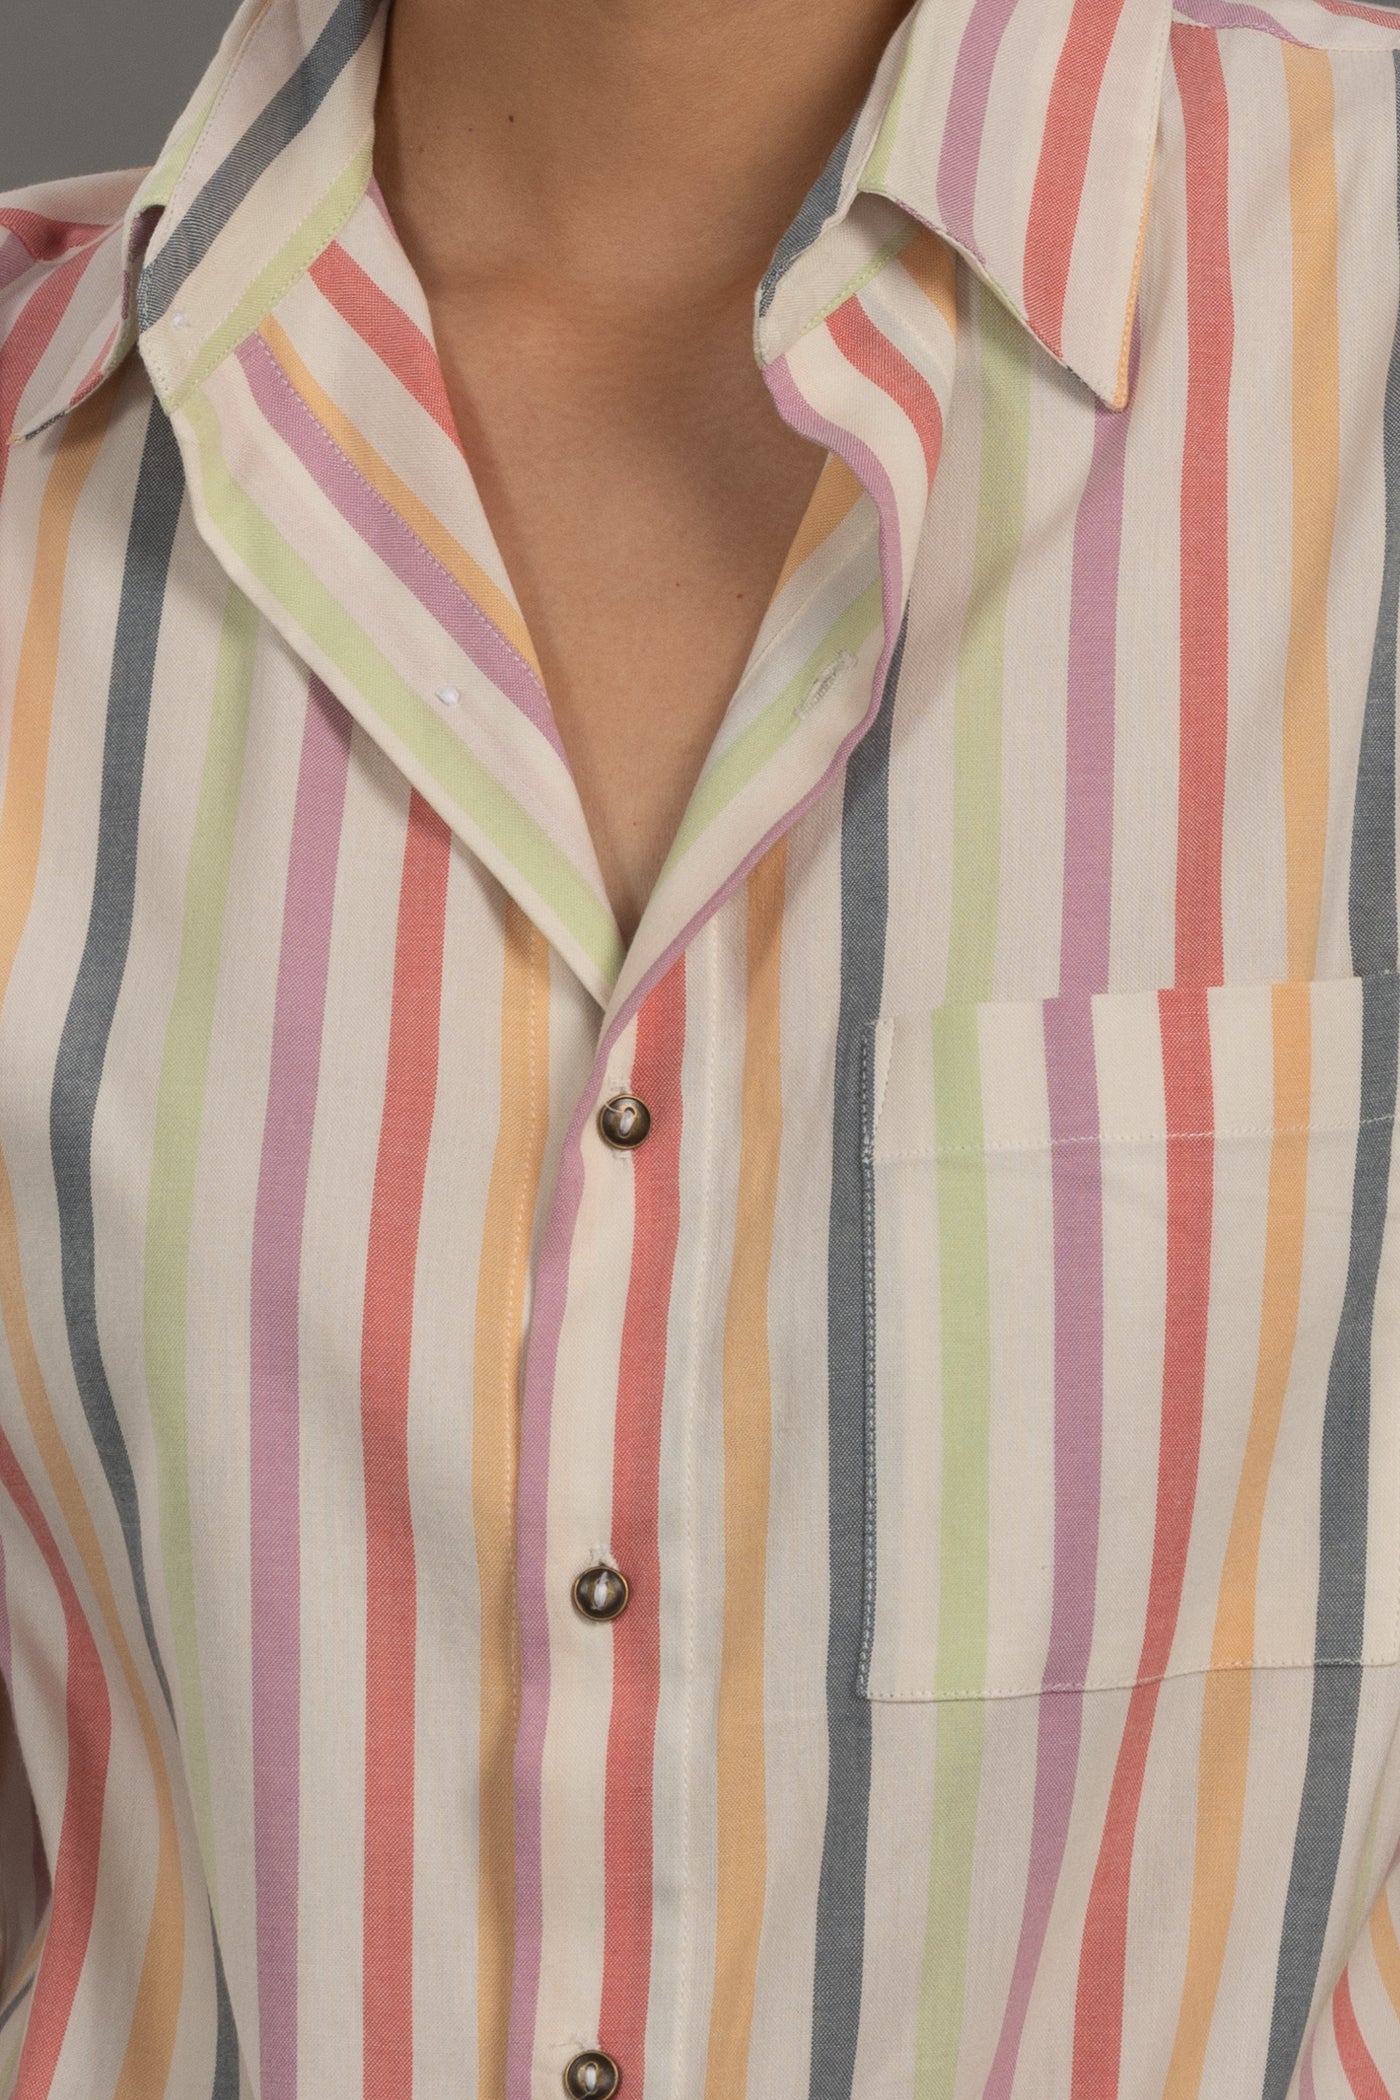 Pastel Stripes Shirt